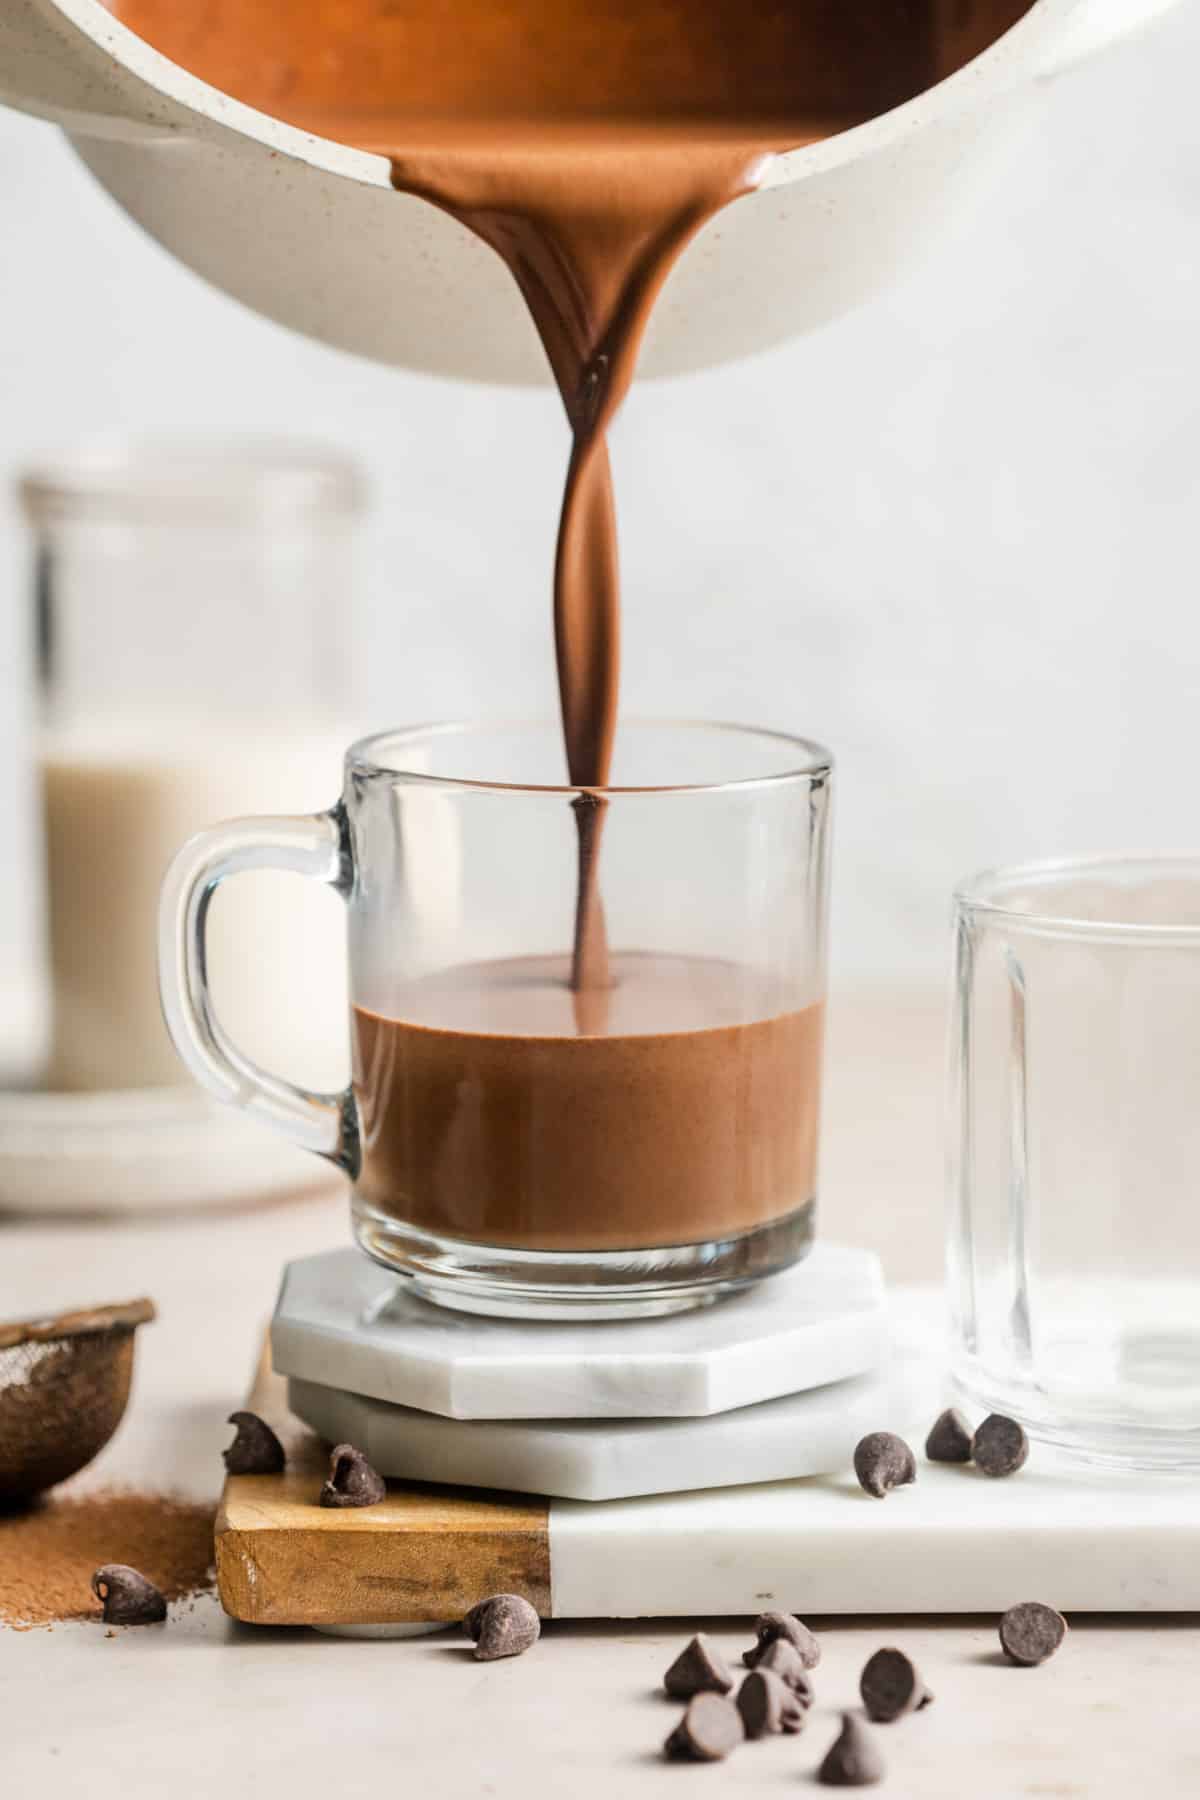 pouring vegan hot chocolate from a saucepan into a glass mug.